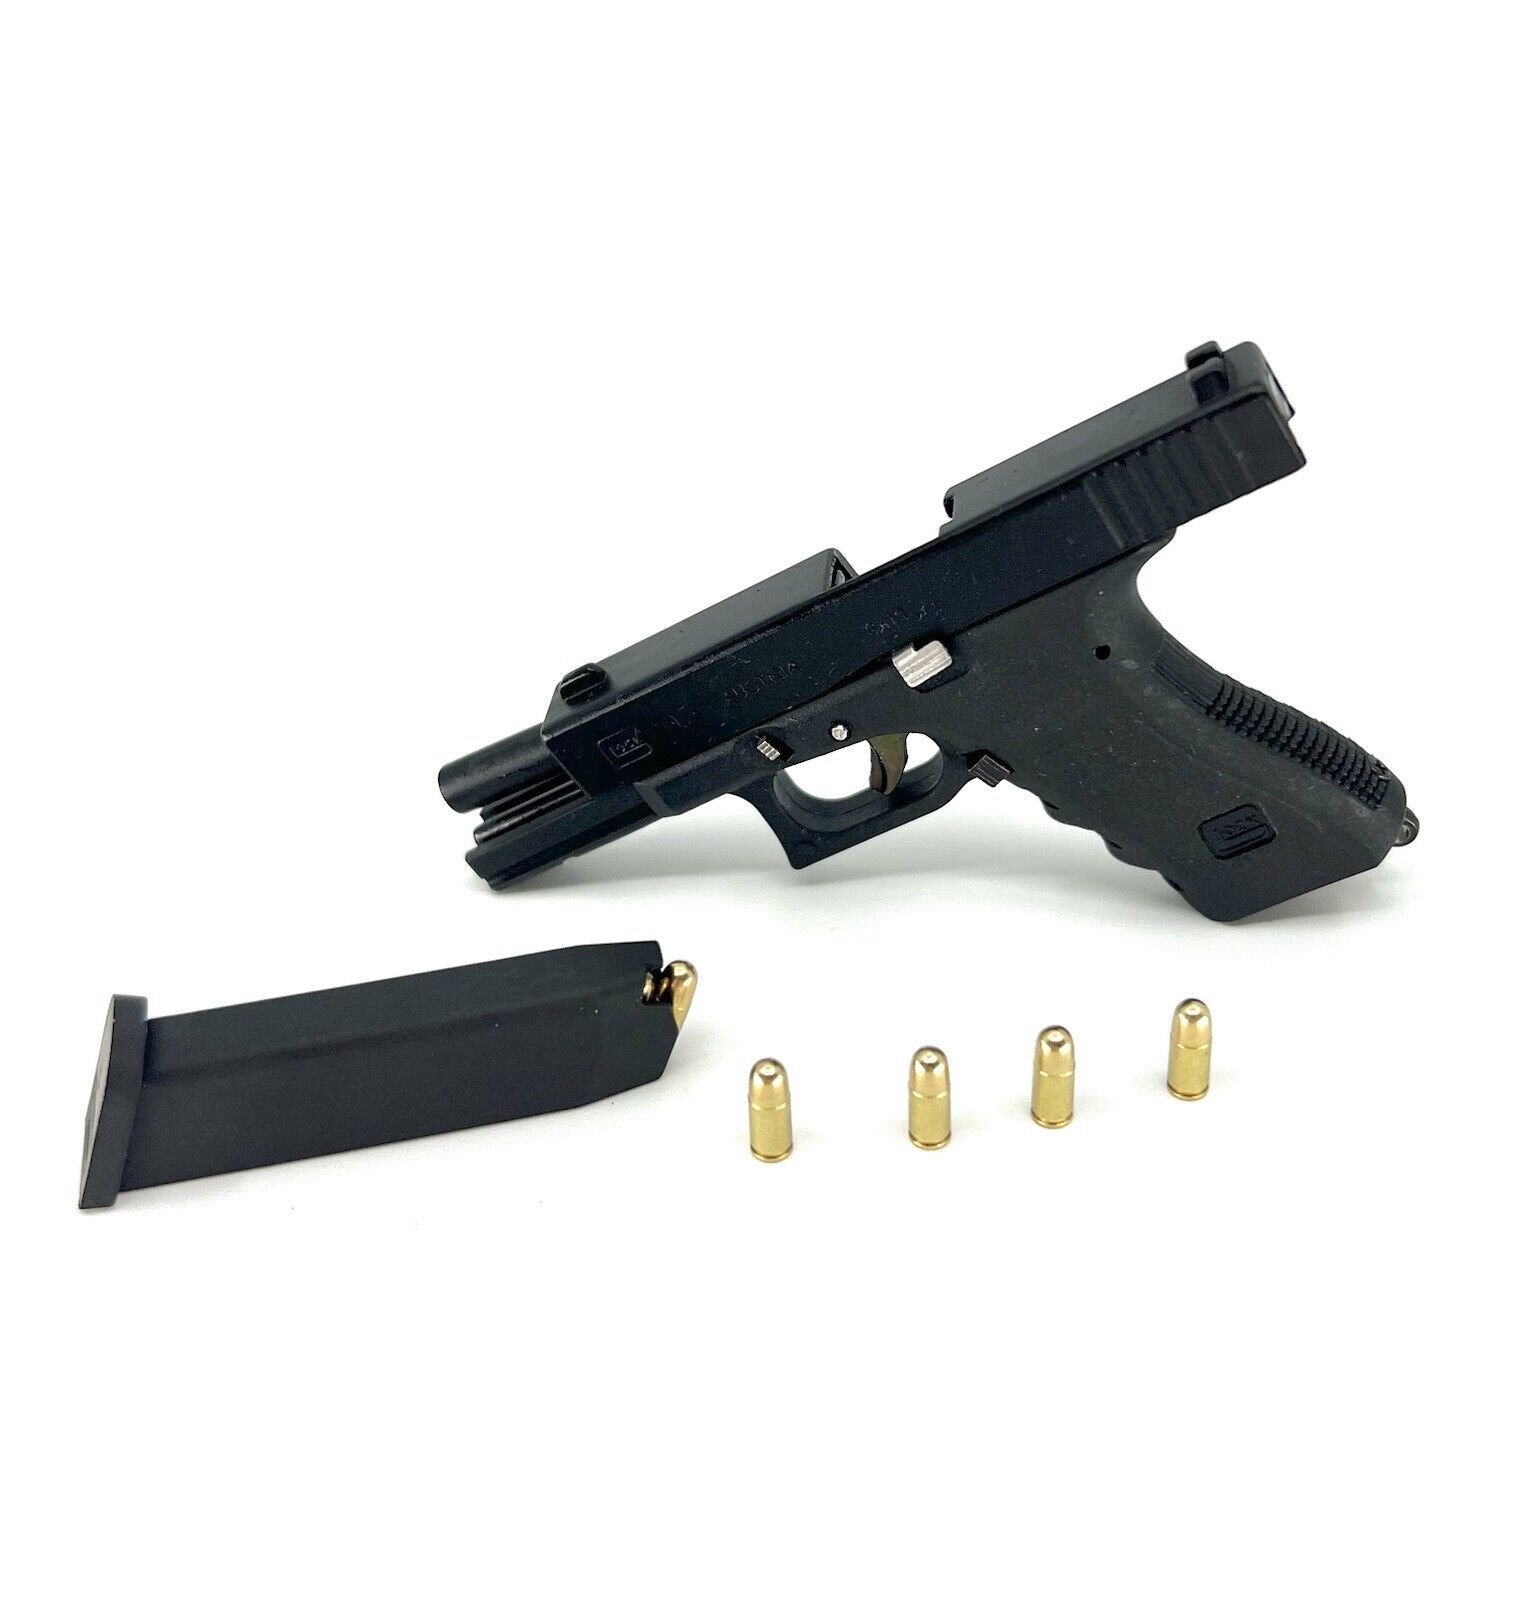 Mini toy Gun glock / G17 Stress Reliever High Quality / USA shipping